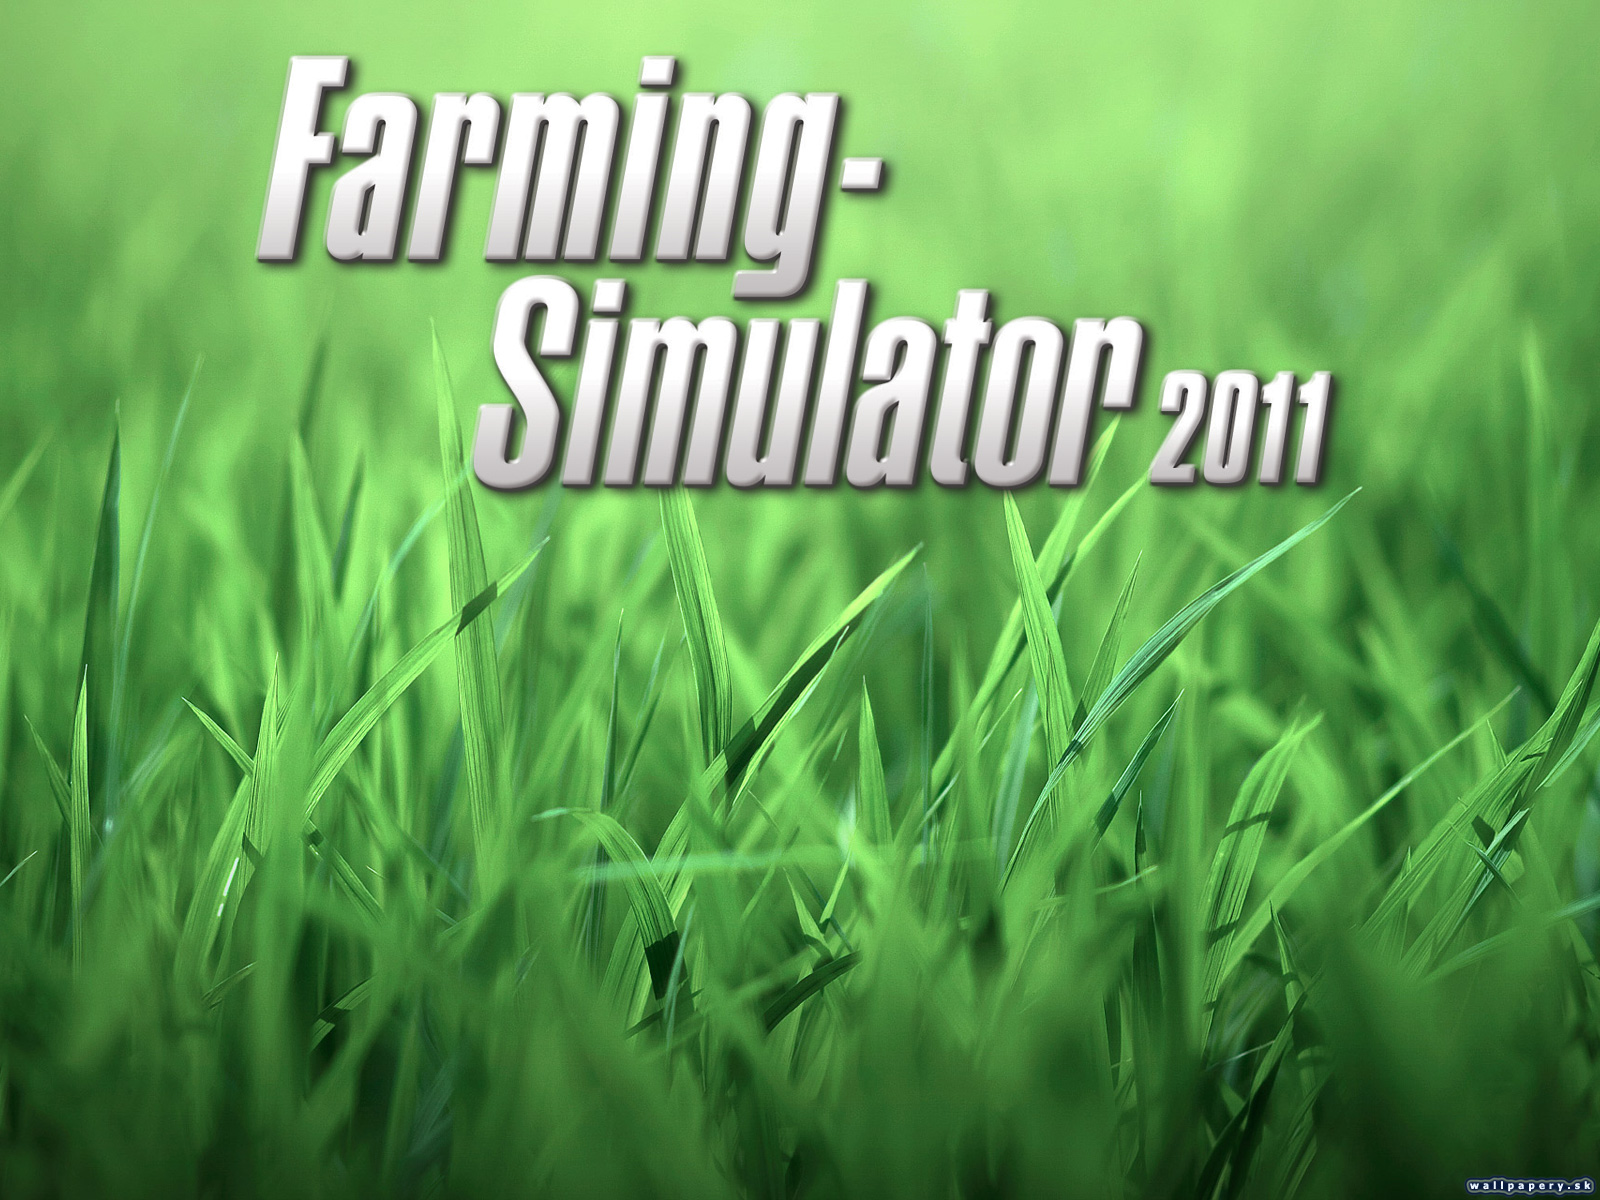 Farming Simulator 2011 - wallpaper 11